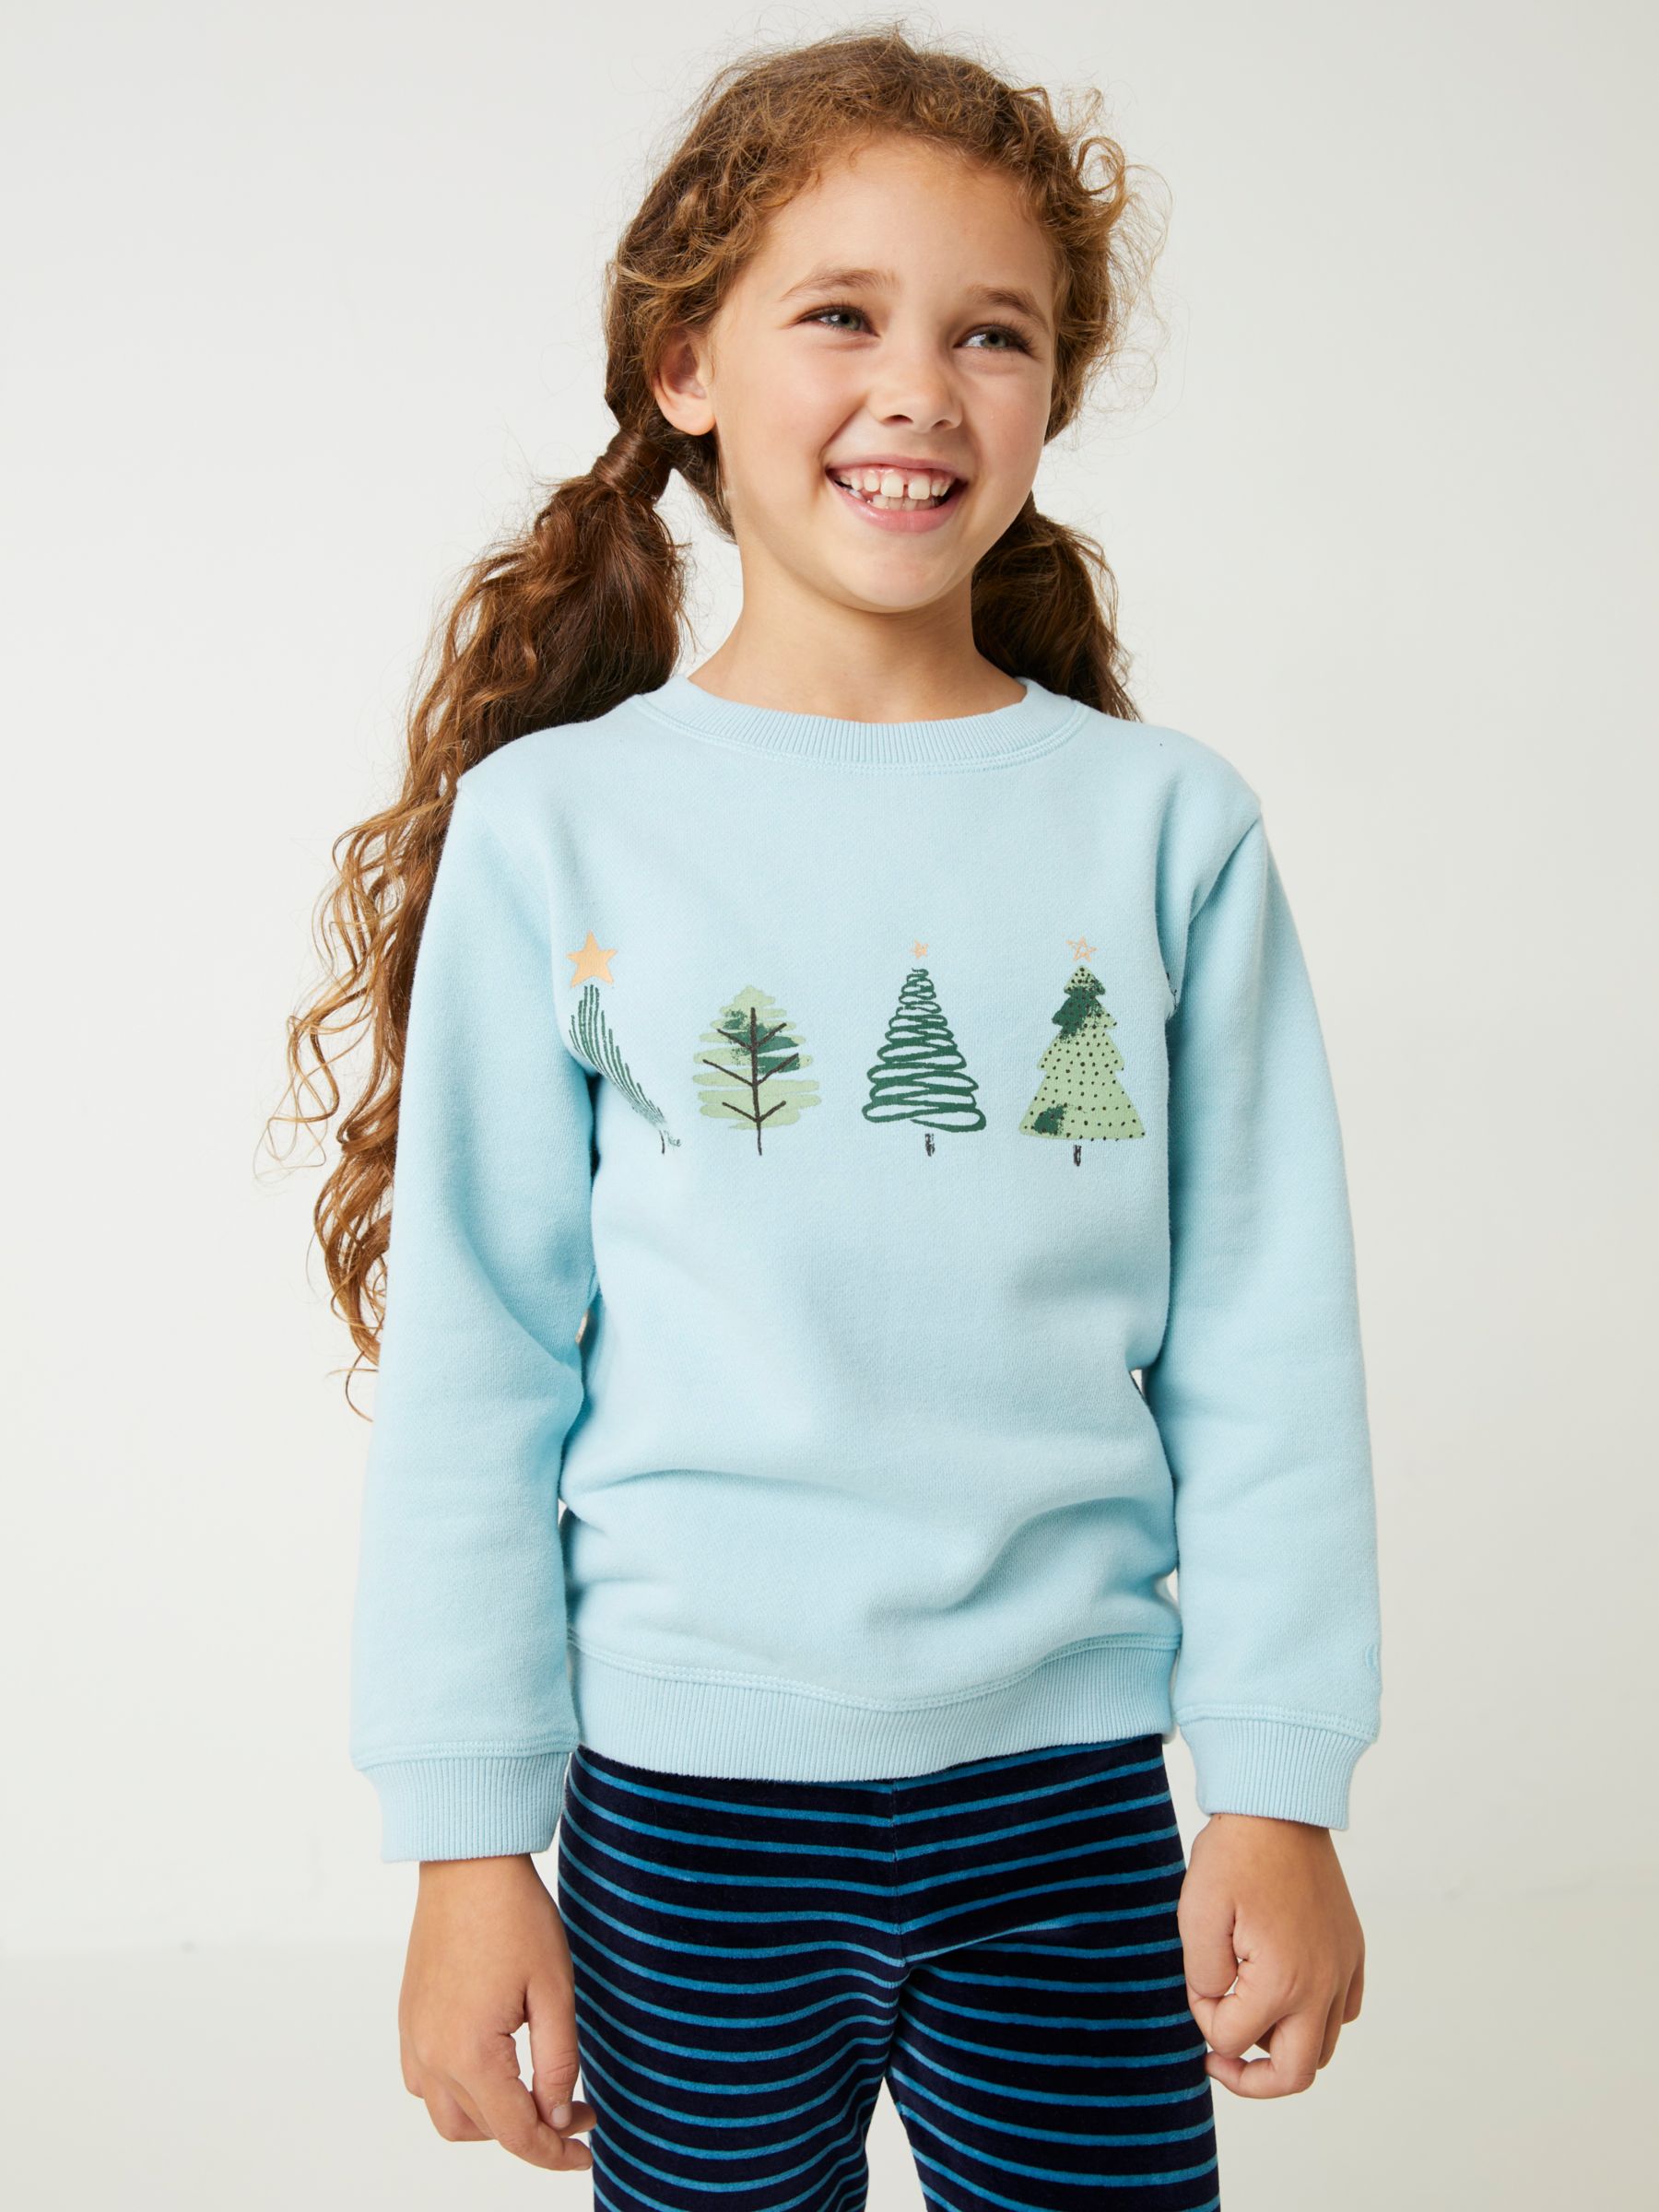 FatFace Kids' Mini Me Christmas Sweatshirt, Light Blue